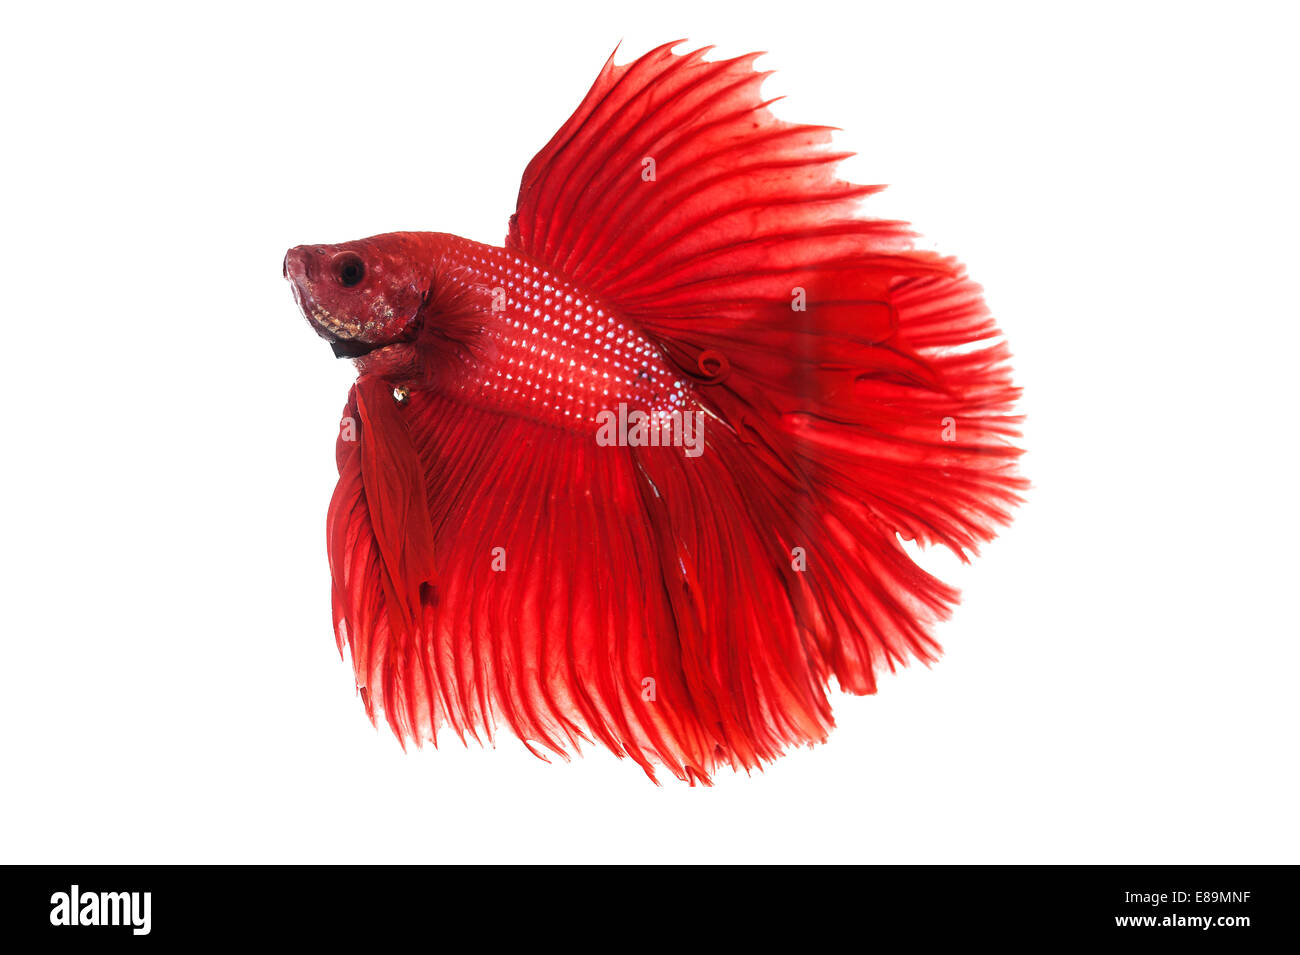 Red halfmoon betta fighting fish Stock -